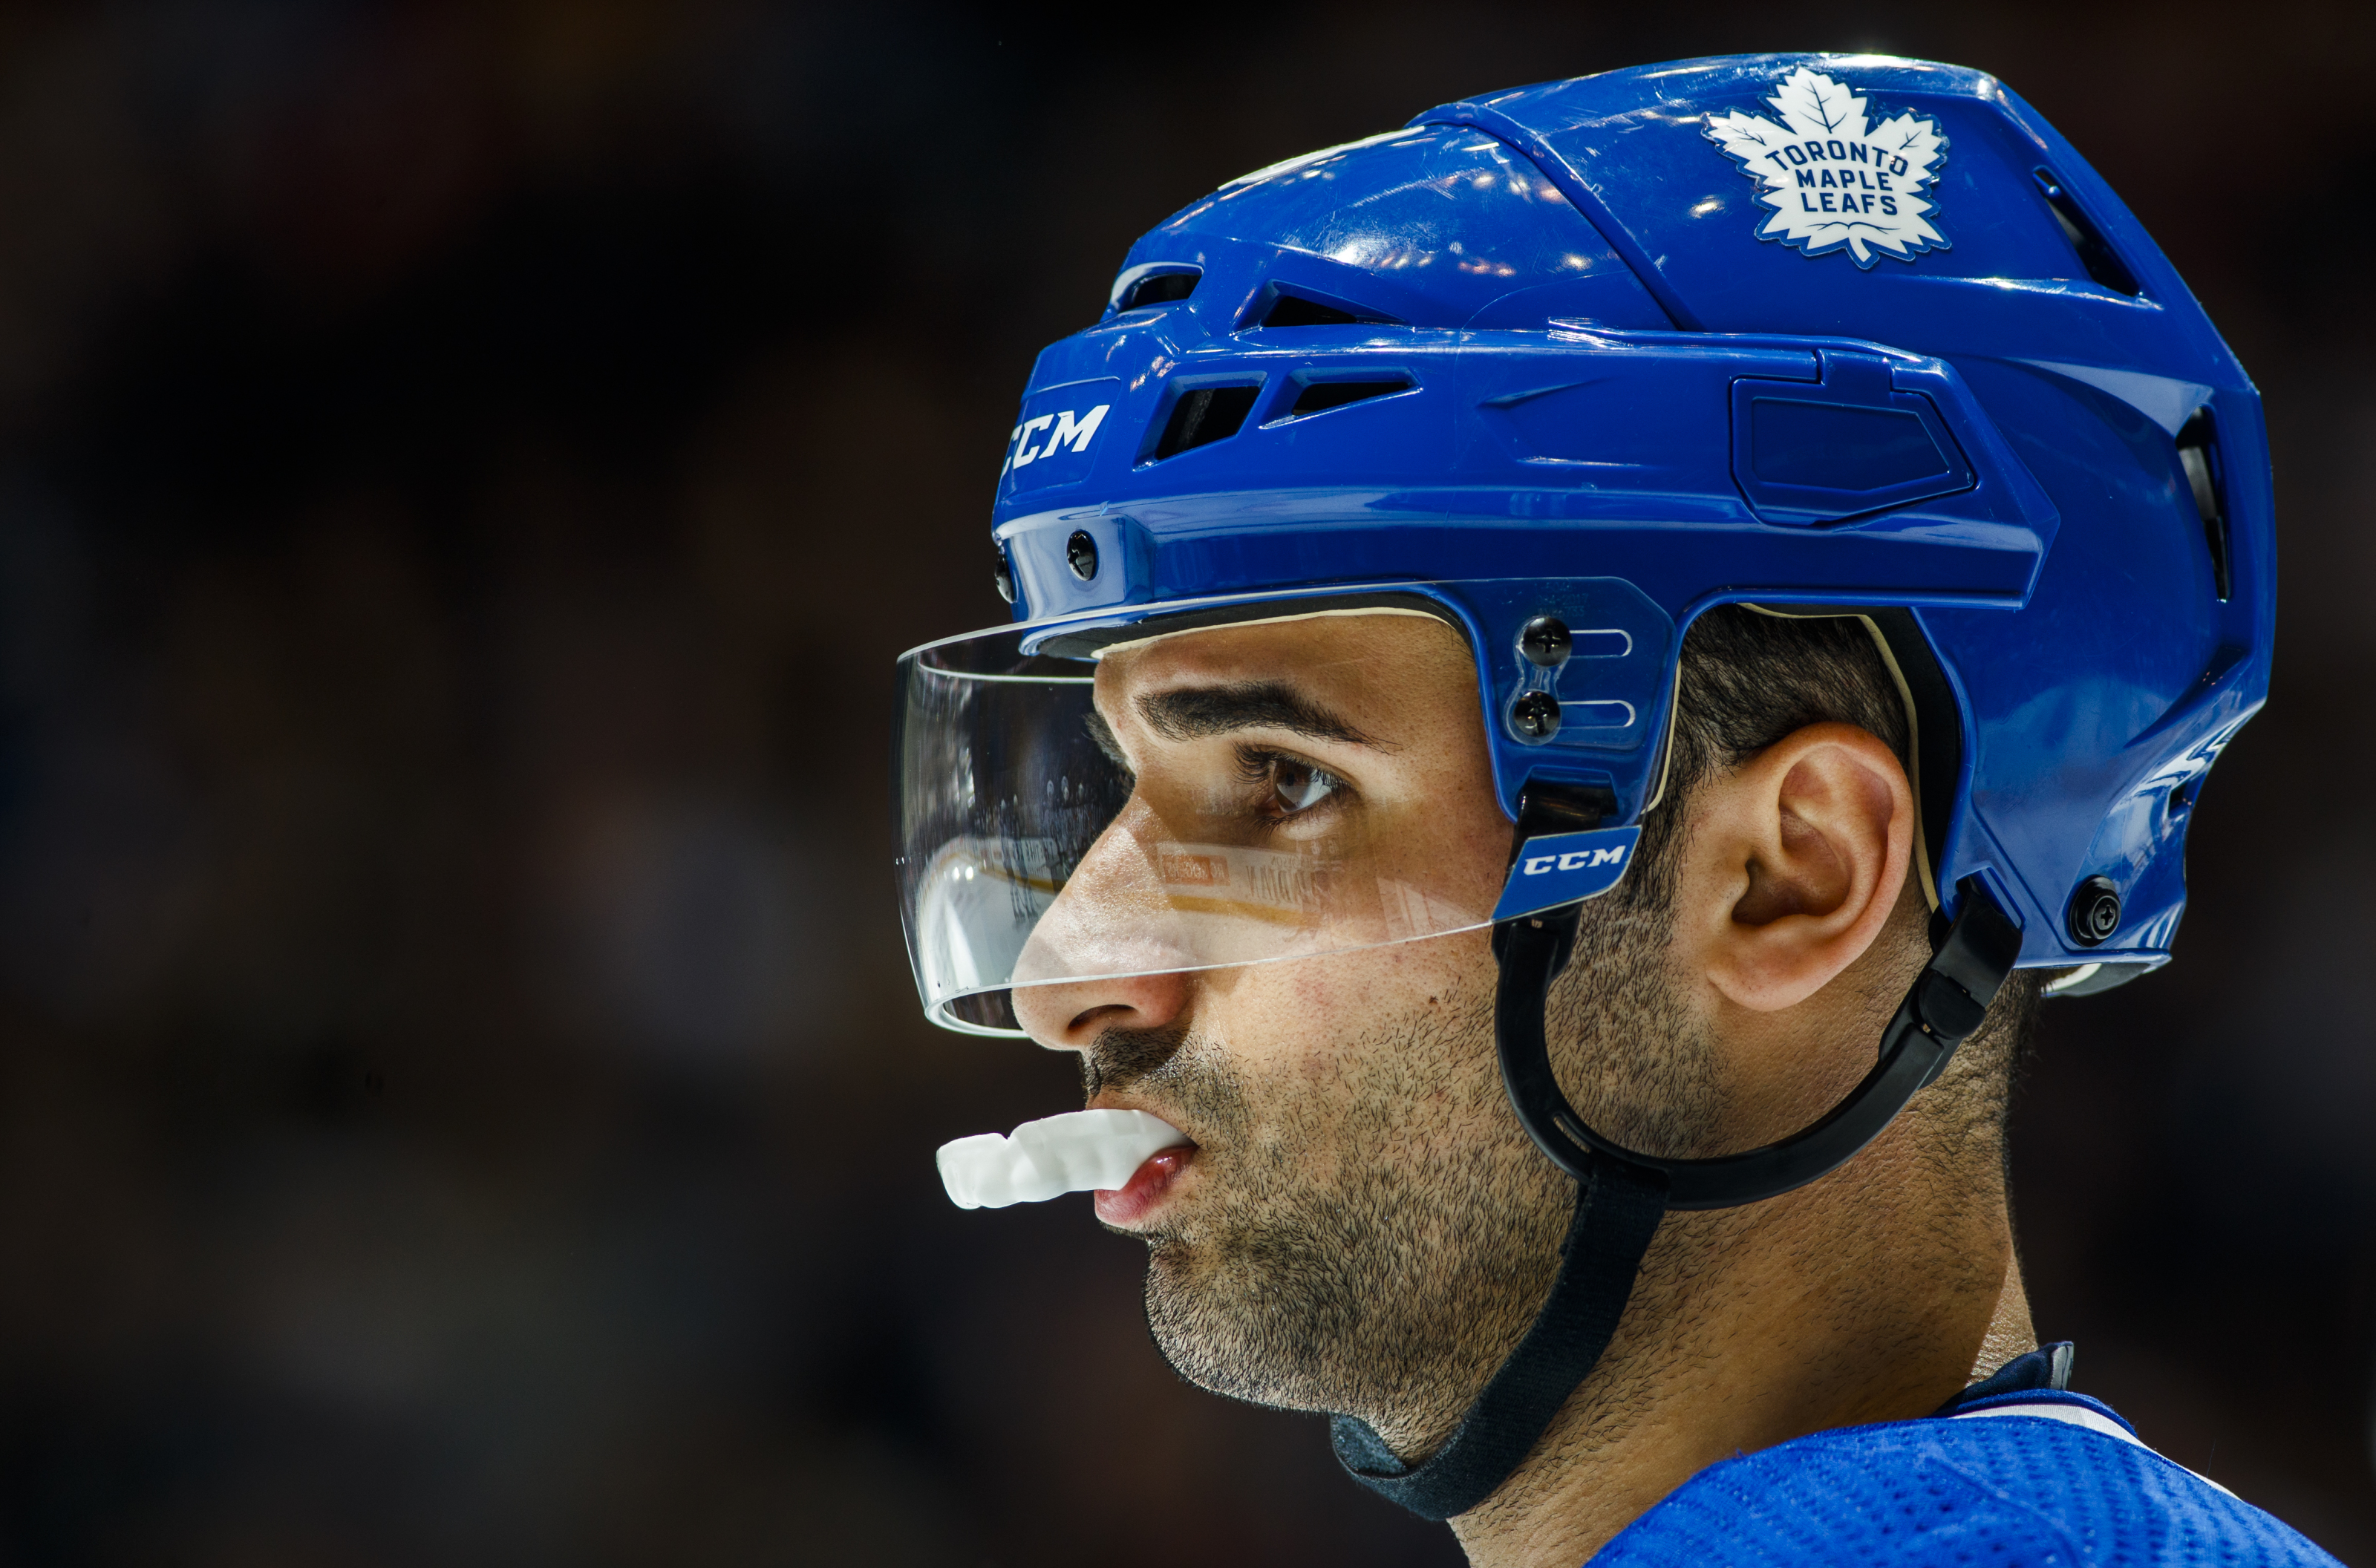  NHL Figures - Toronto Maple Leafs - Mats Sundin Player